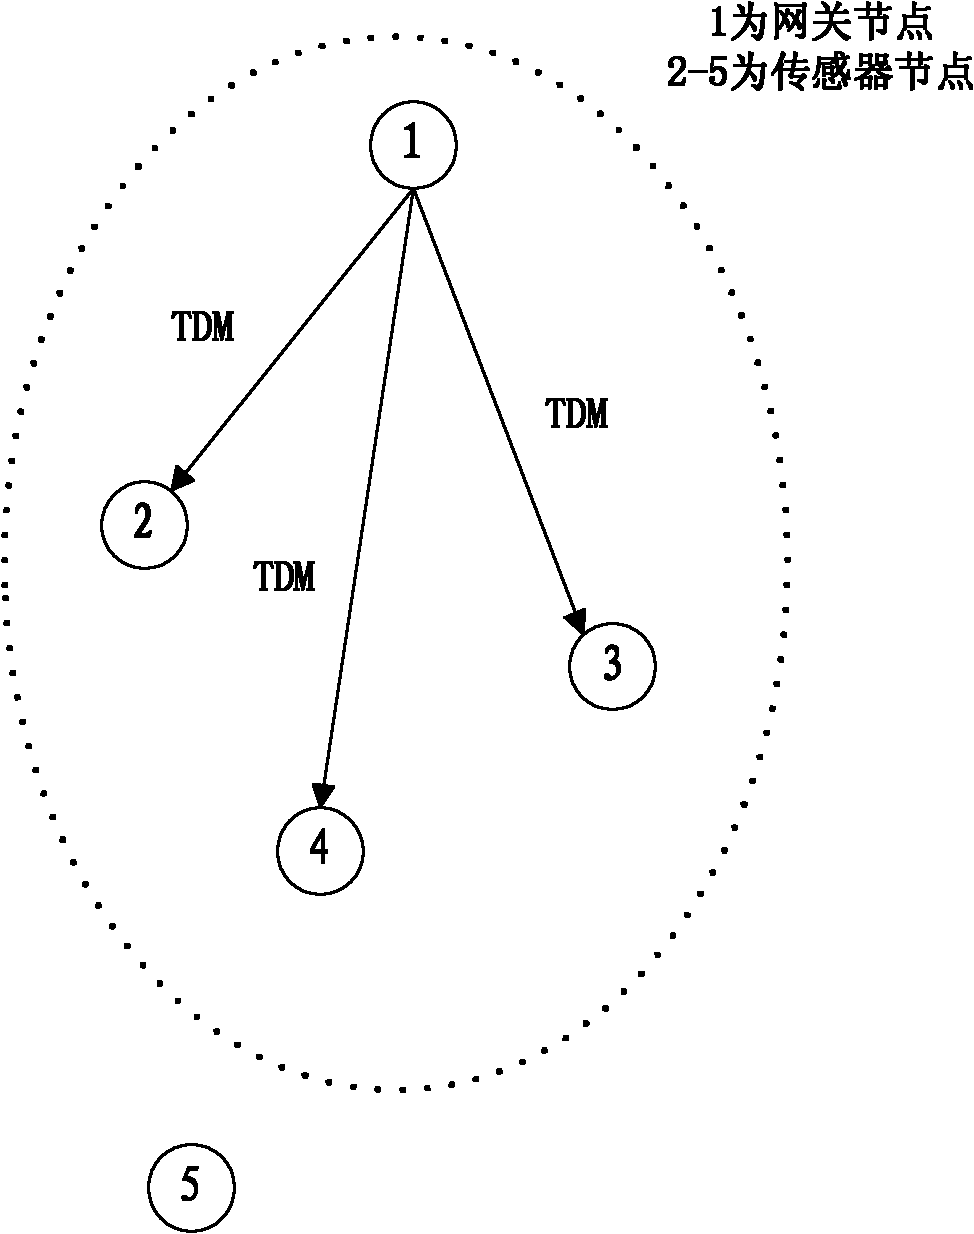 Power-adjustable zonal sensor network topology control method